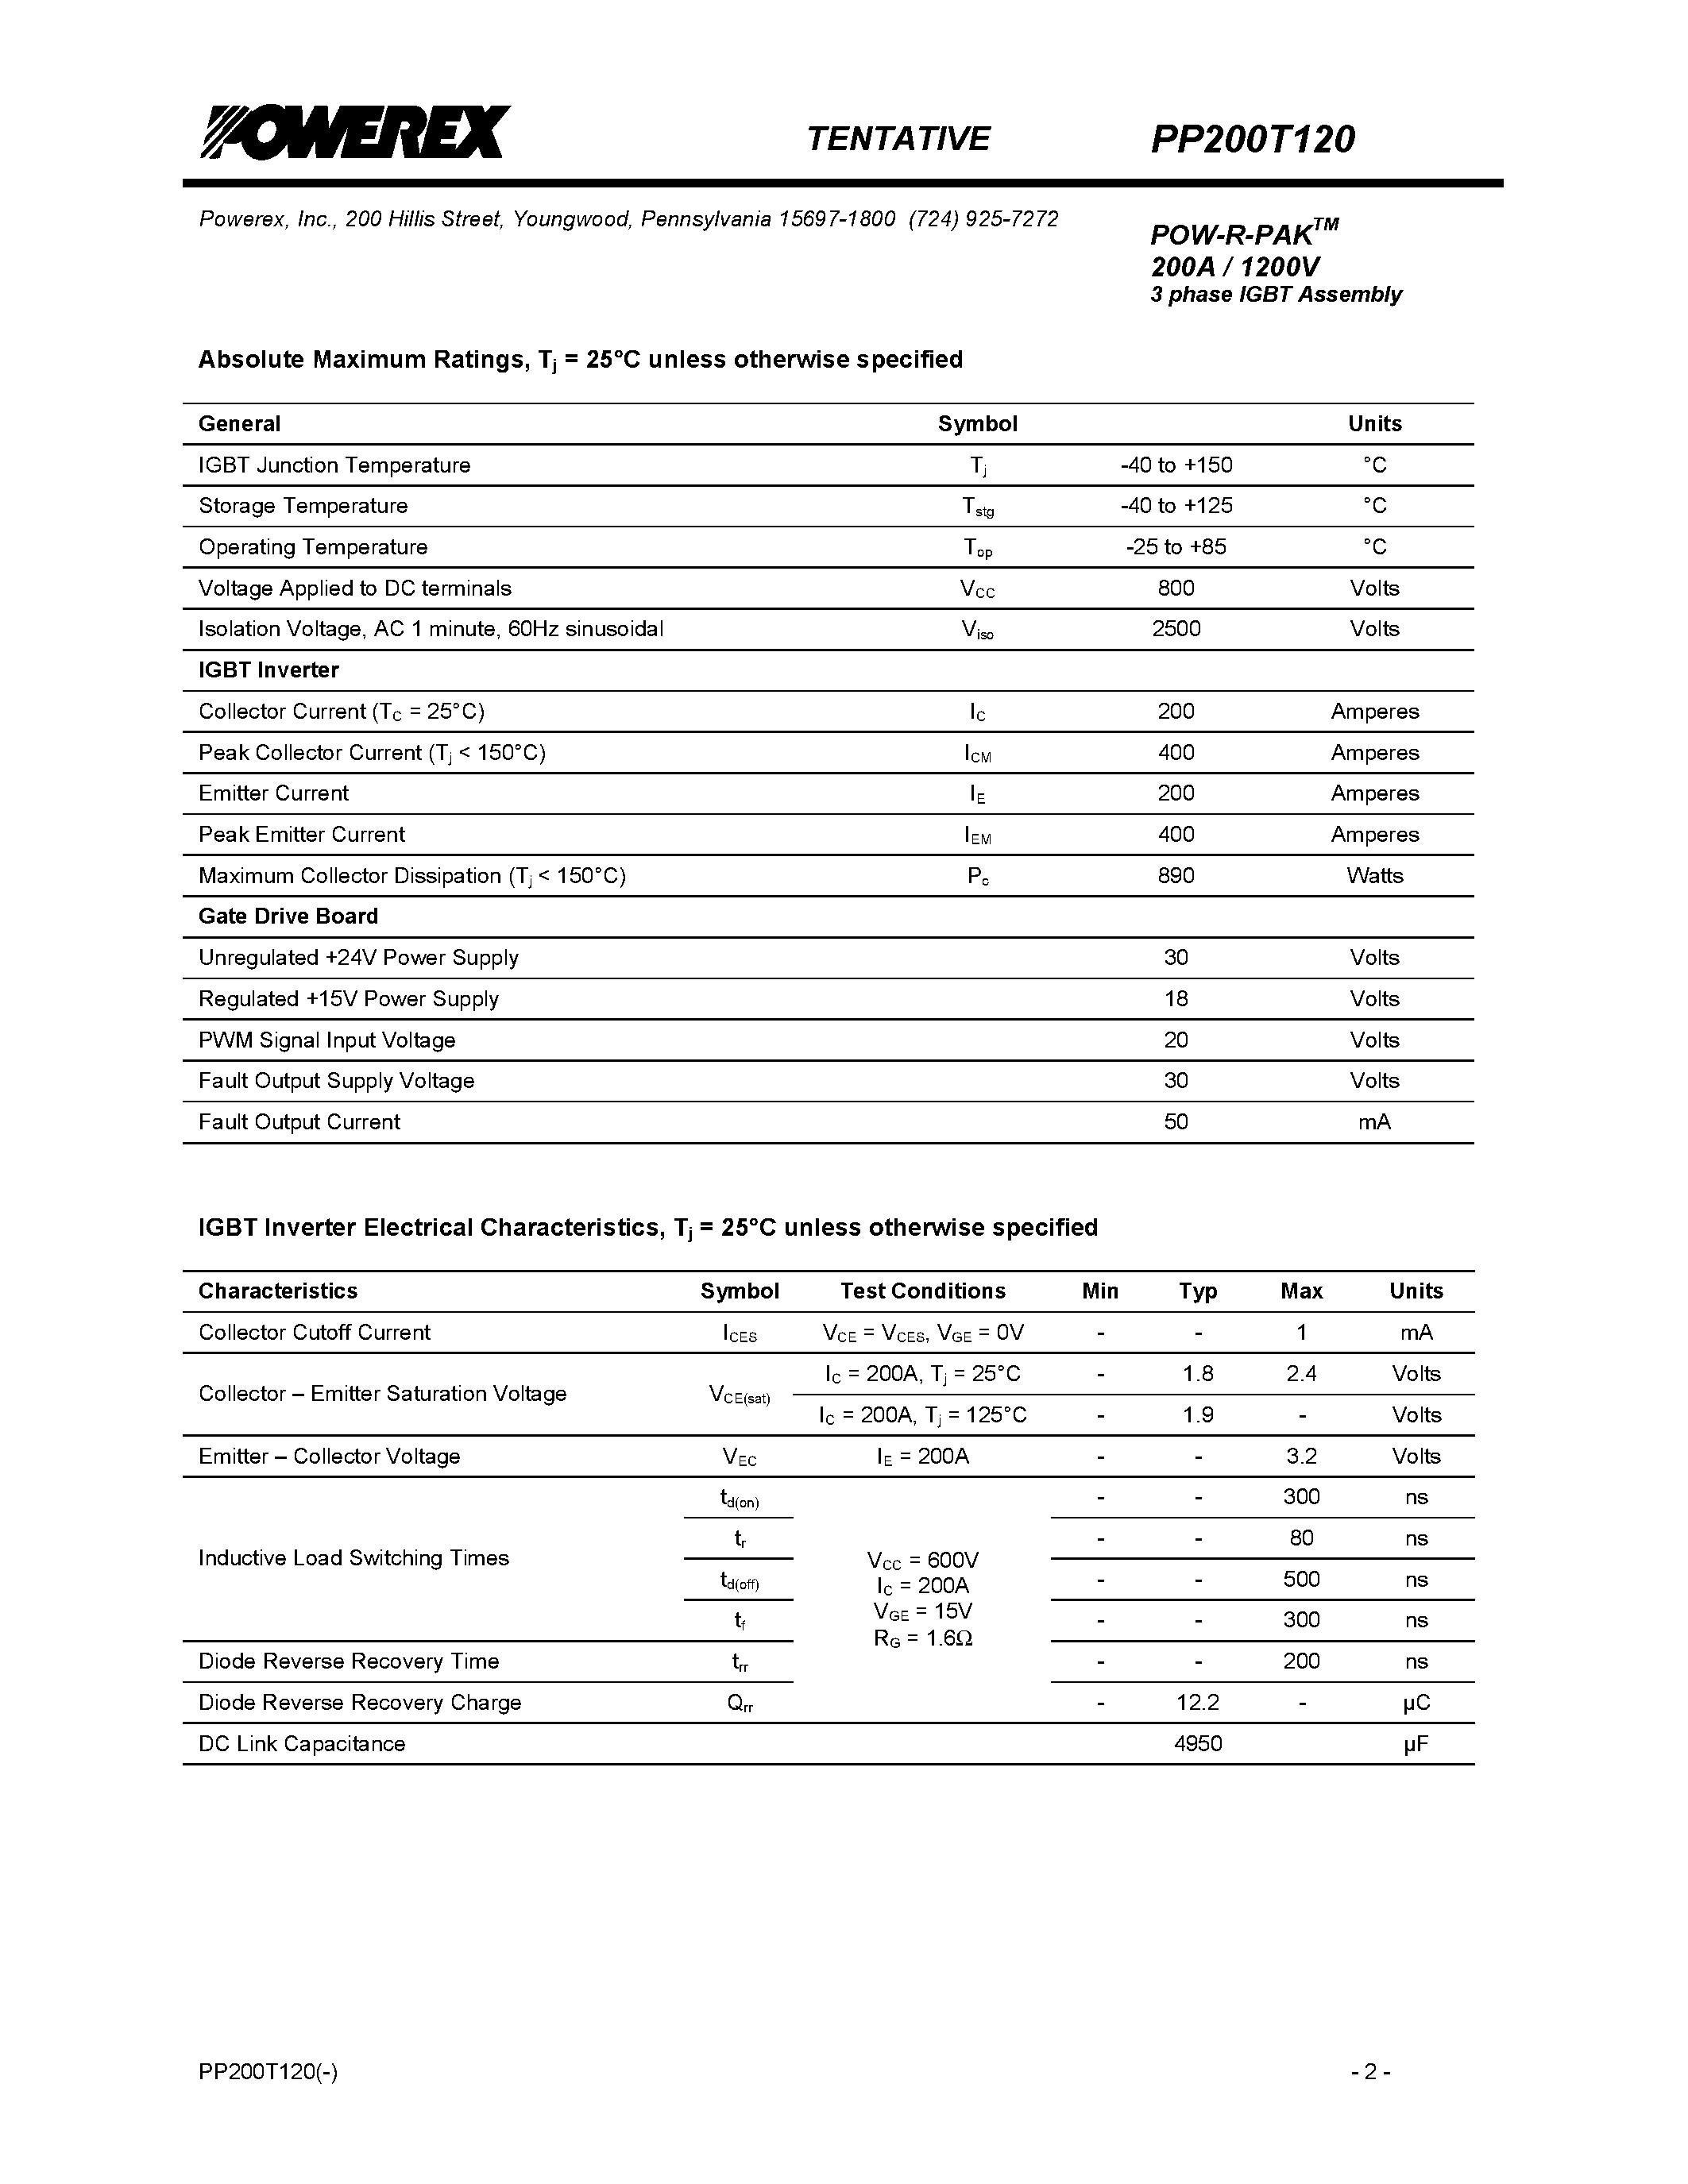 Datasheet PP200T120 - POW-R-PAK 200A / 1200V 3 phase IGBT Assembly page 2